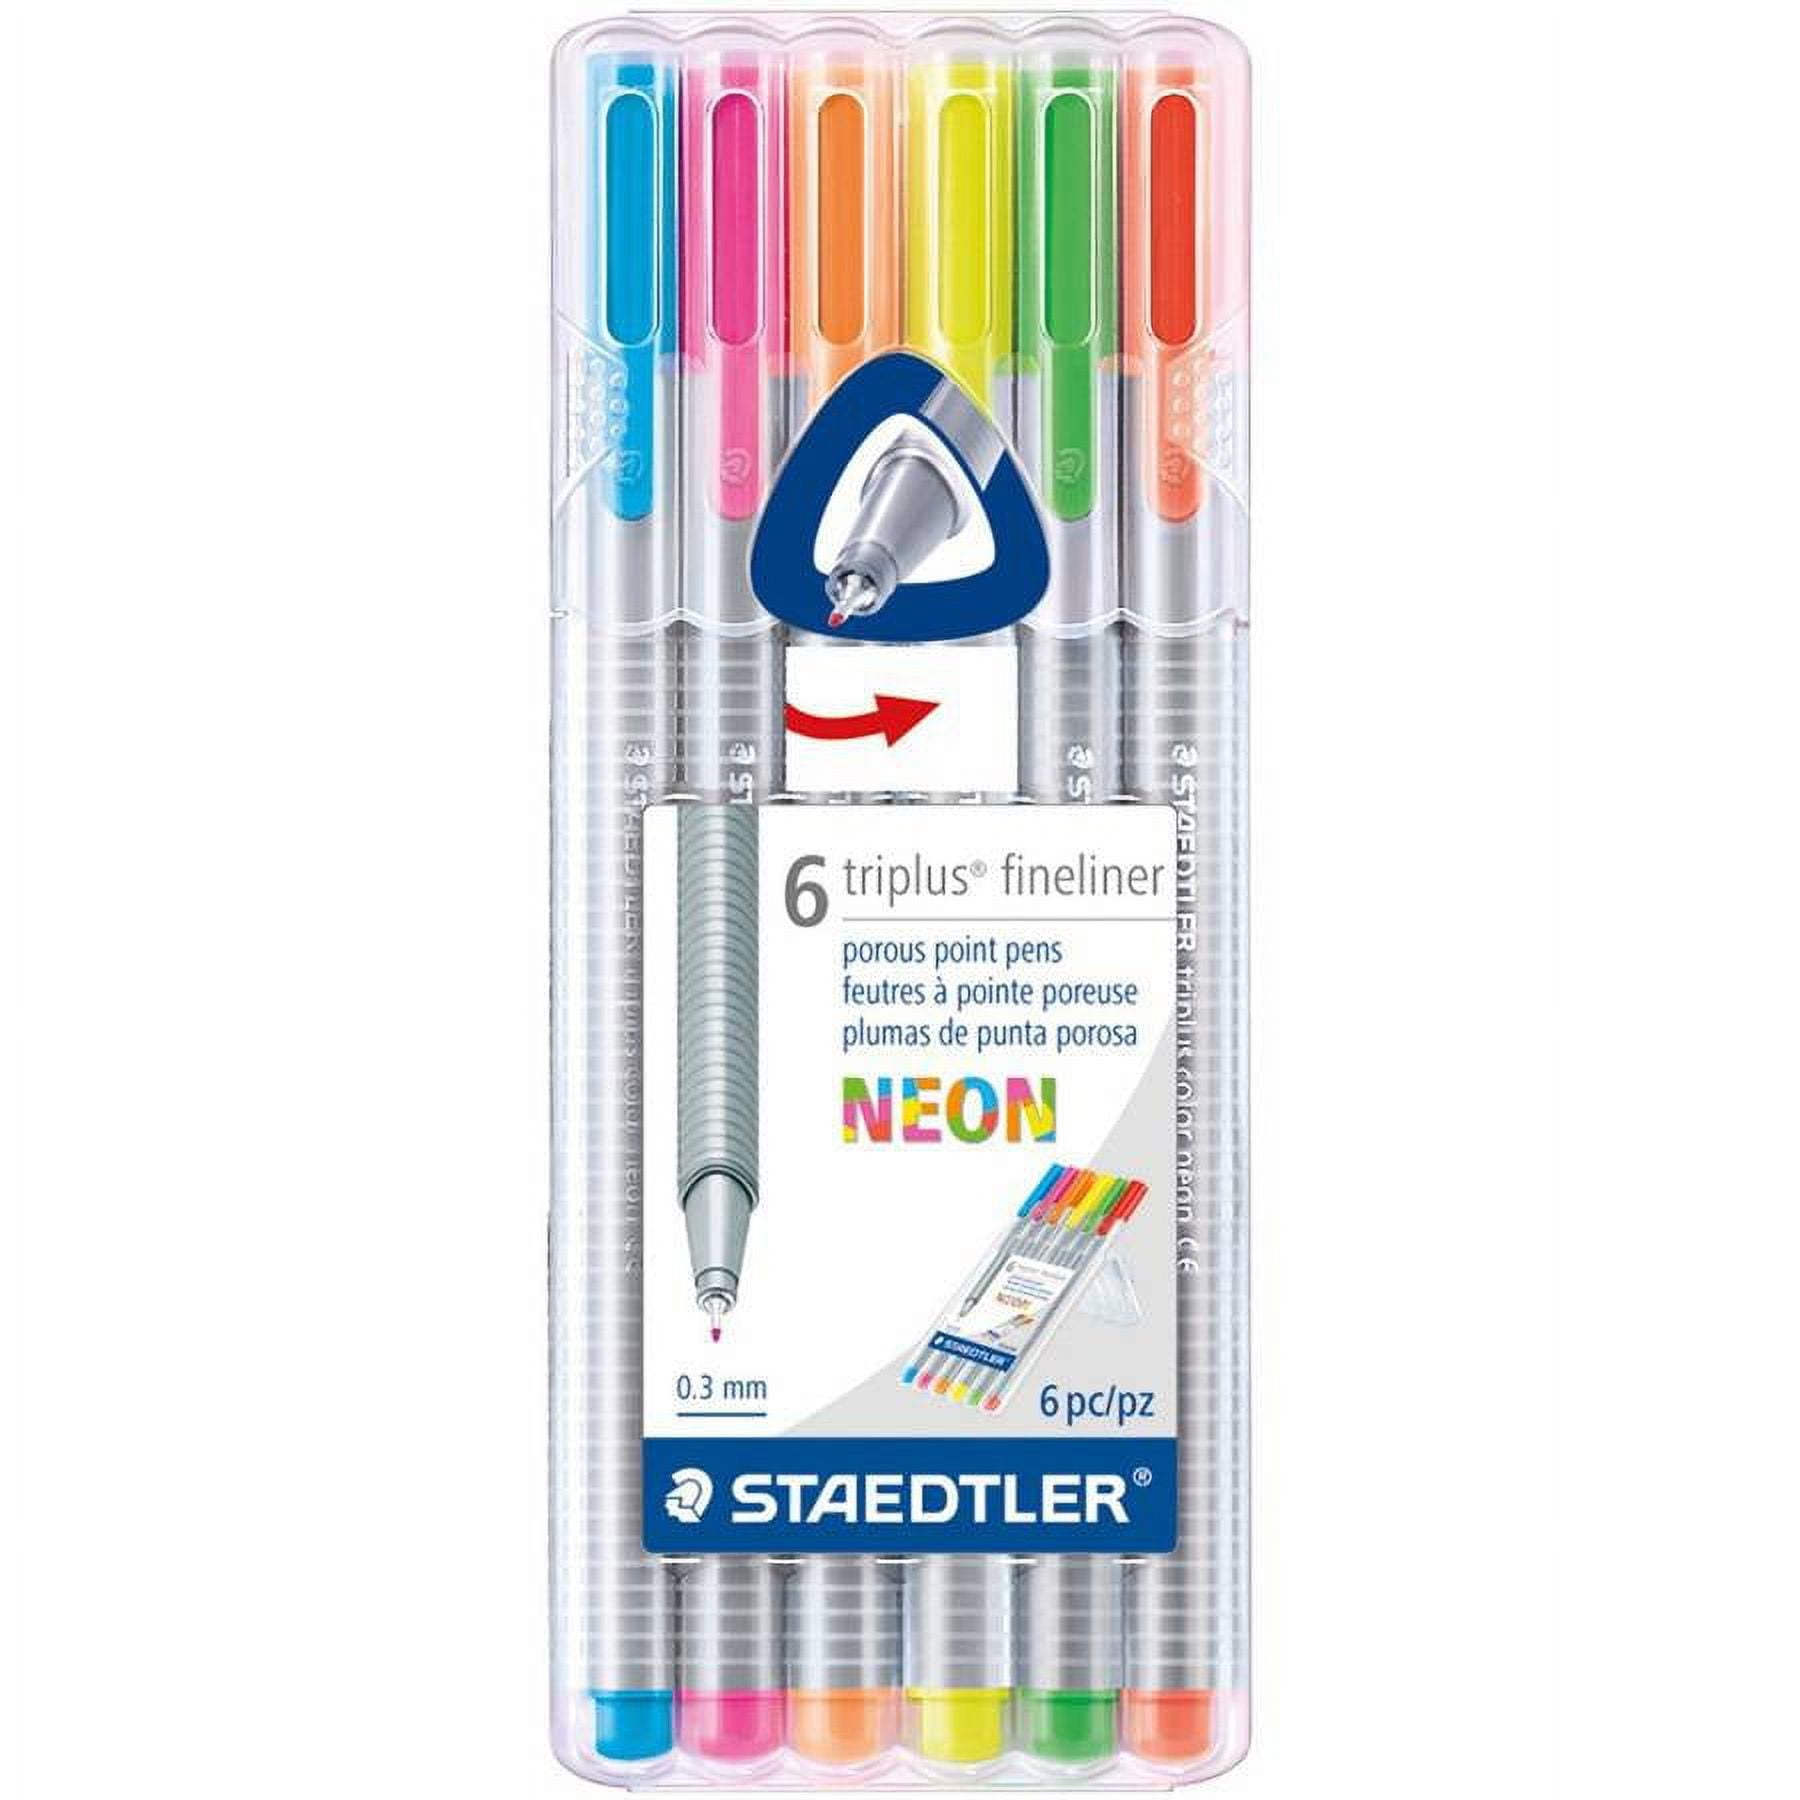 Staedtler TriPlus 334 C30P Fine Liner Pens in 30 Colours